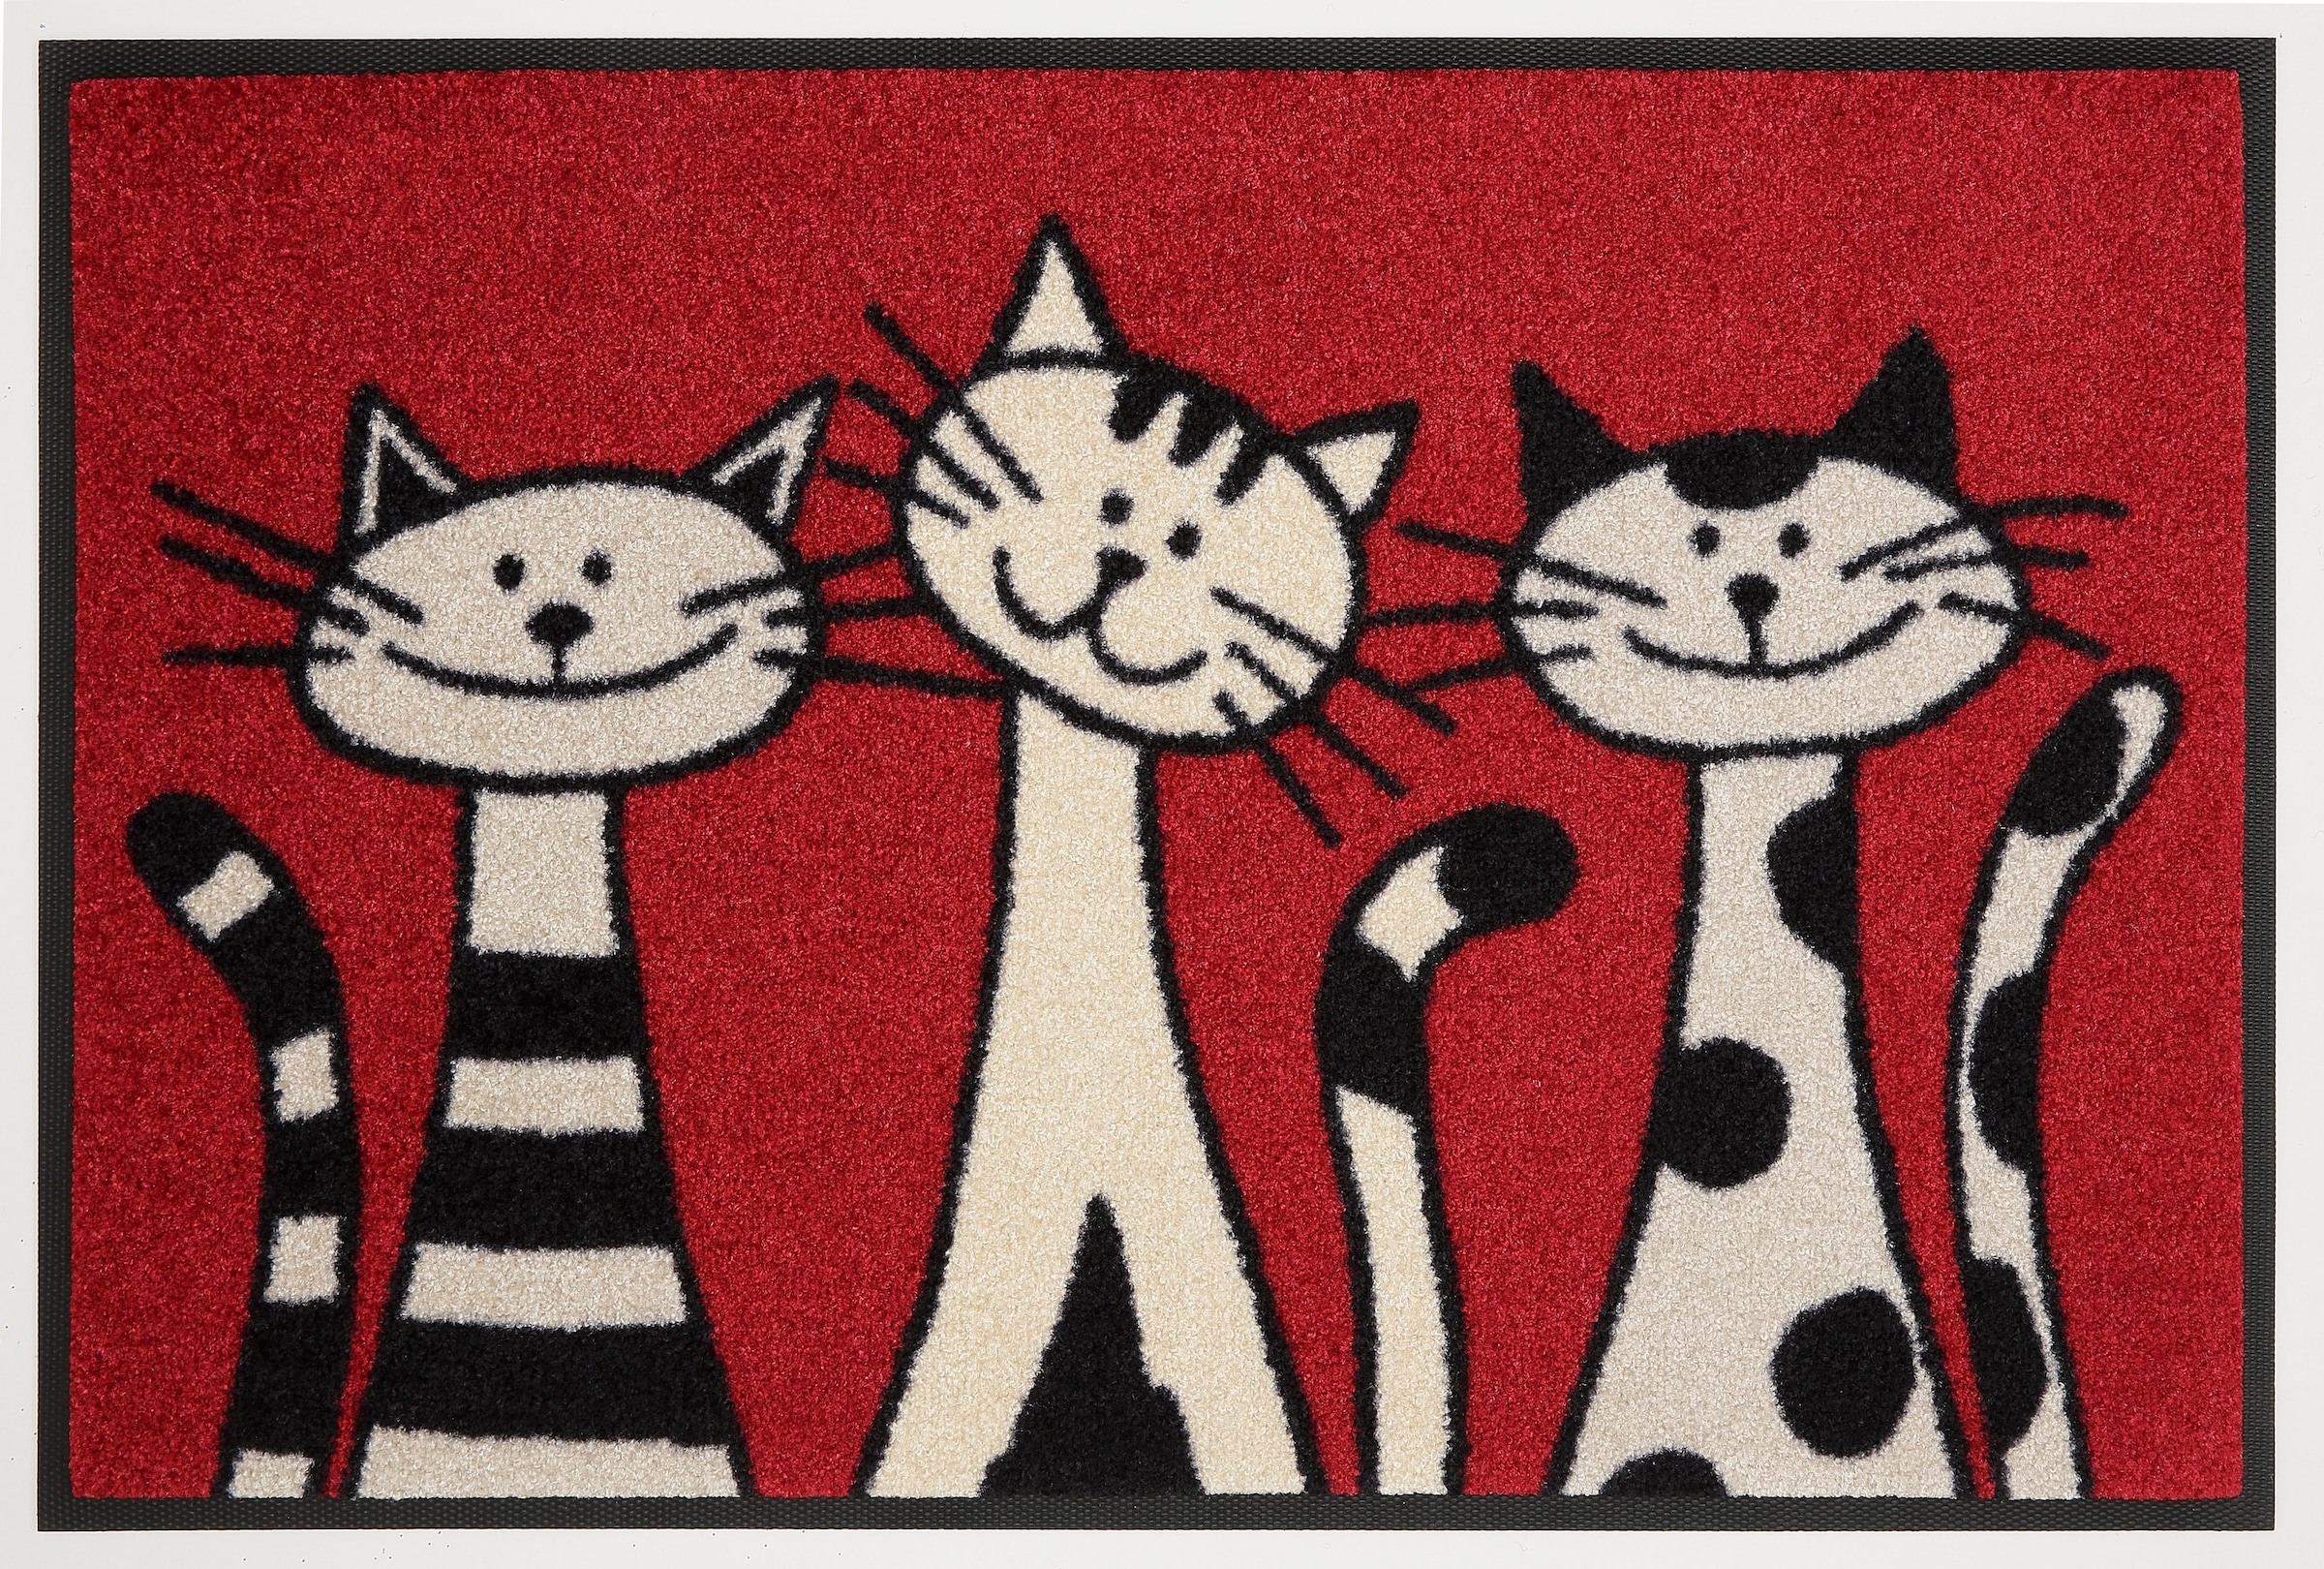 wash+dry by Kleen-Tex Fussmatte »Three Cats«, rechteckig, Schmutzfangmatte, Motiv Katzen, rutschhemmend, waschbar